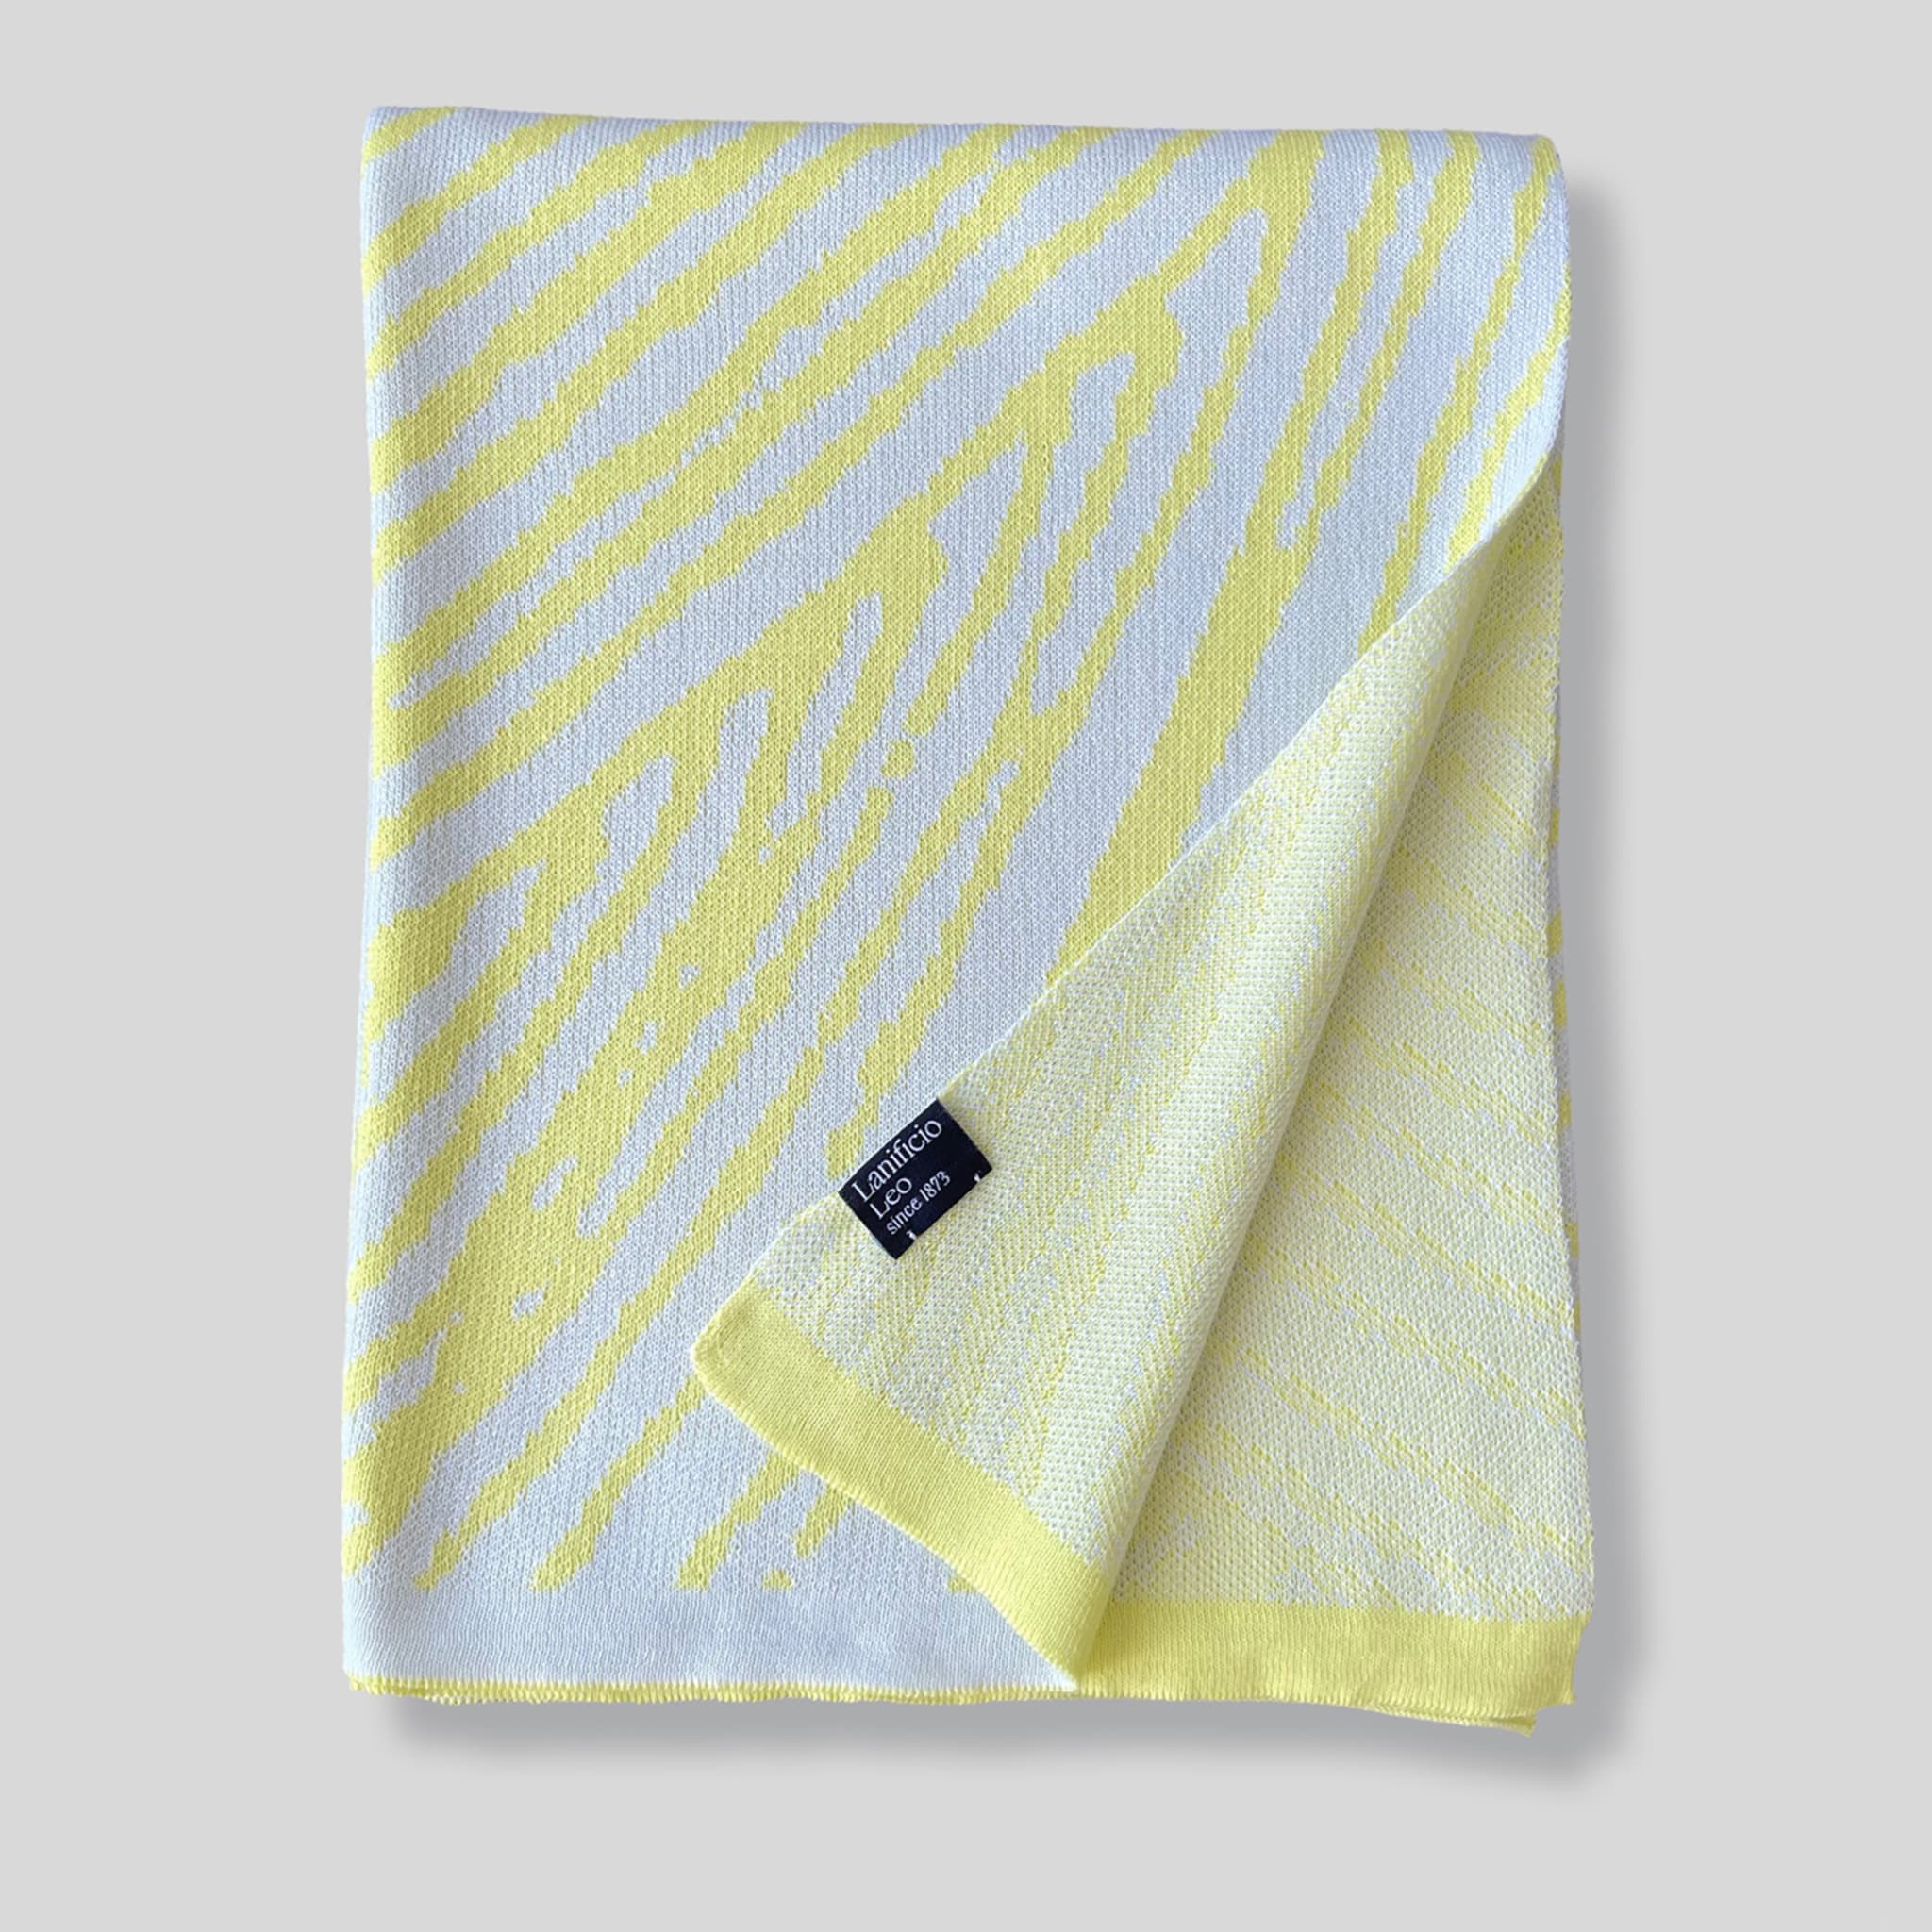 Tratto Bio Neon-Yellow & White Blanket by Emilio Salvatore Leo - Alternative view 4